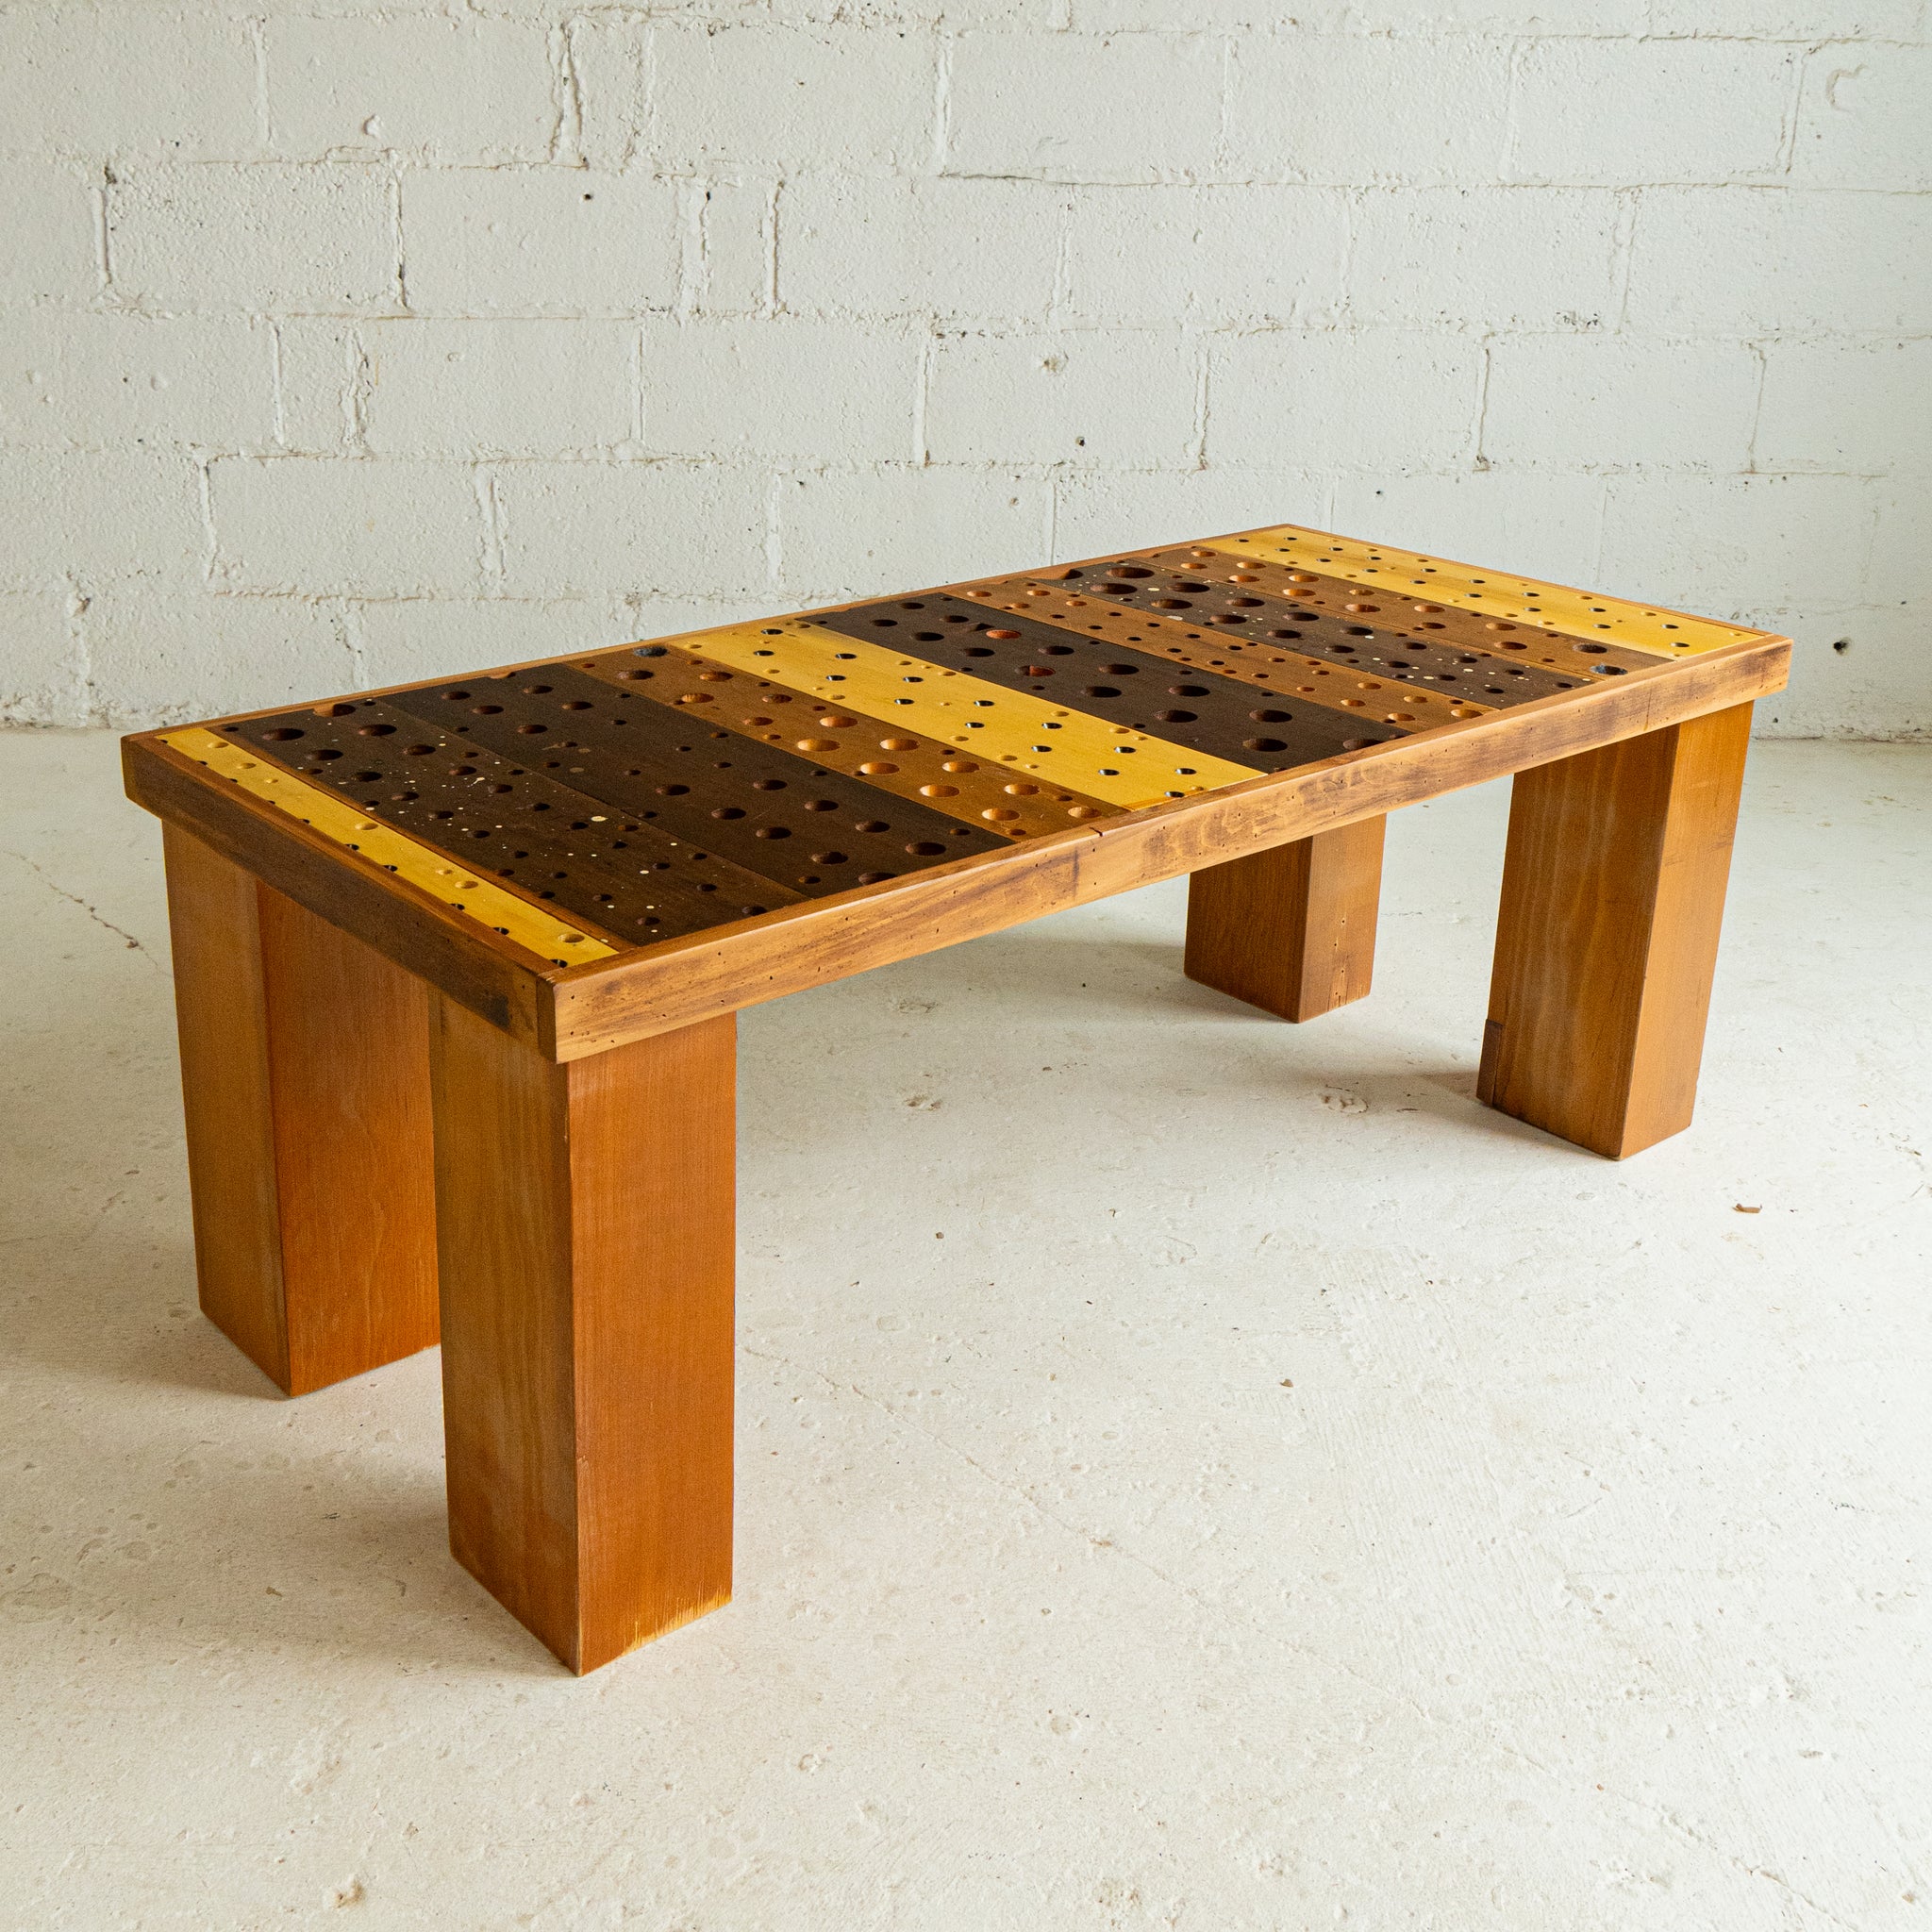 pipe organ coffee table 4 full view reclaimed wood